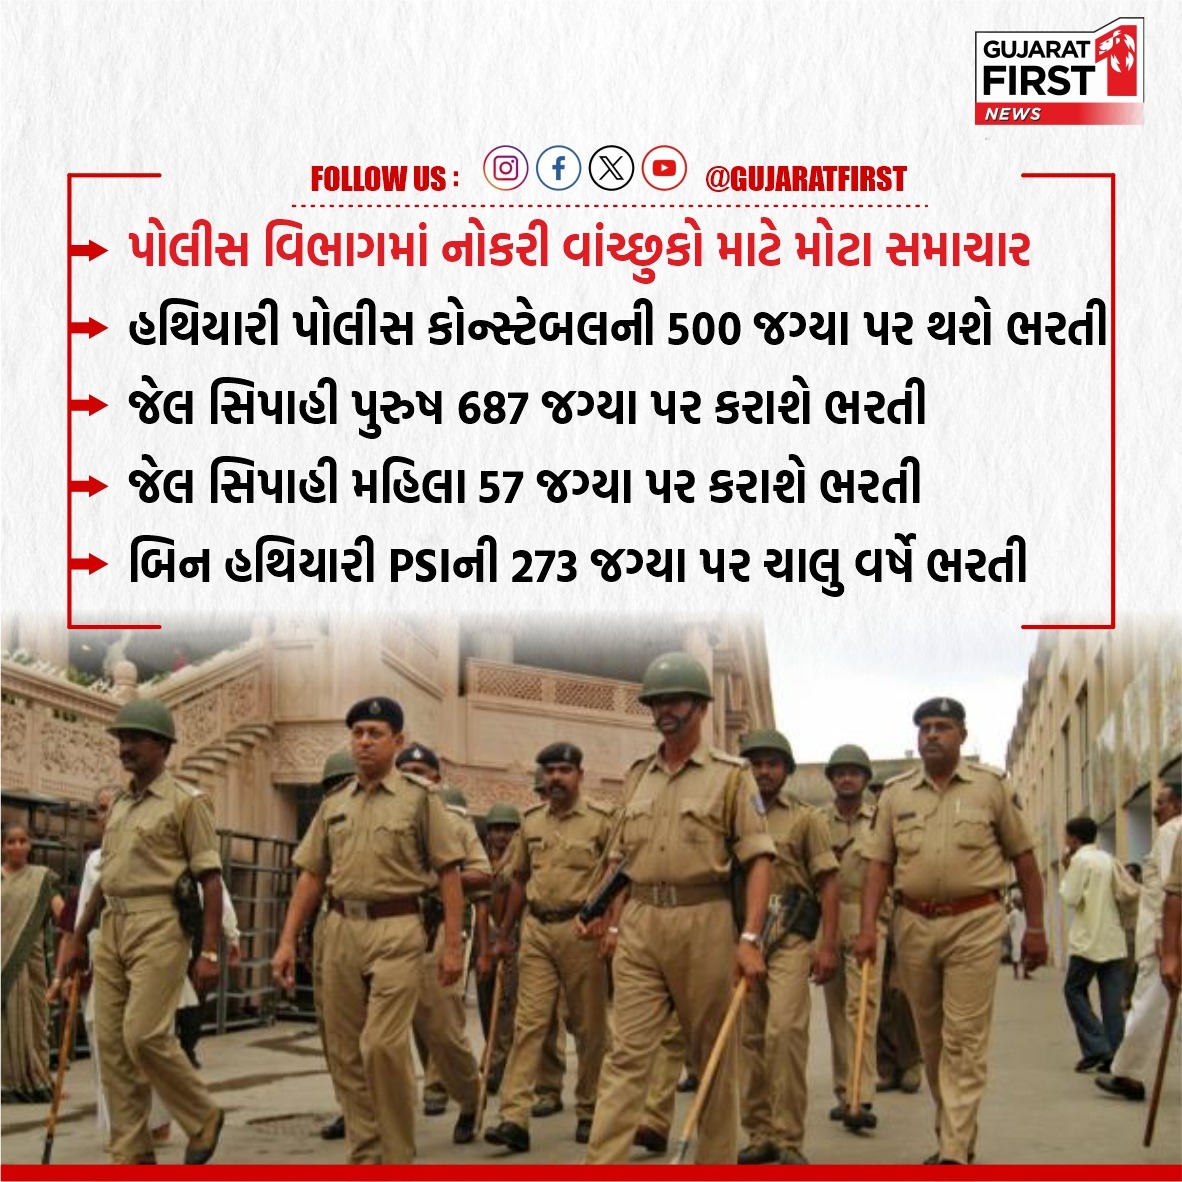 Gujarat Police Recruitment : ગુજરાત પોલીસ વિભાગમાં ક્યા ક્યા પદ માટે કેટલી ભરતી થશે? 

#GujaratPolice #PoliceRecruitment #PoliceDepartment #BreakingNews #GujaratFirst @GujaratPolice @CMOGuj @sanghaviharsh @dgpgujarat @Bhupendrapbjp